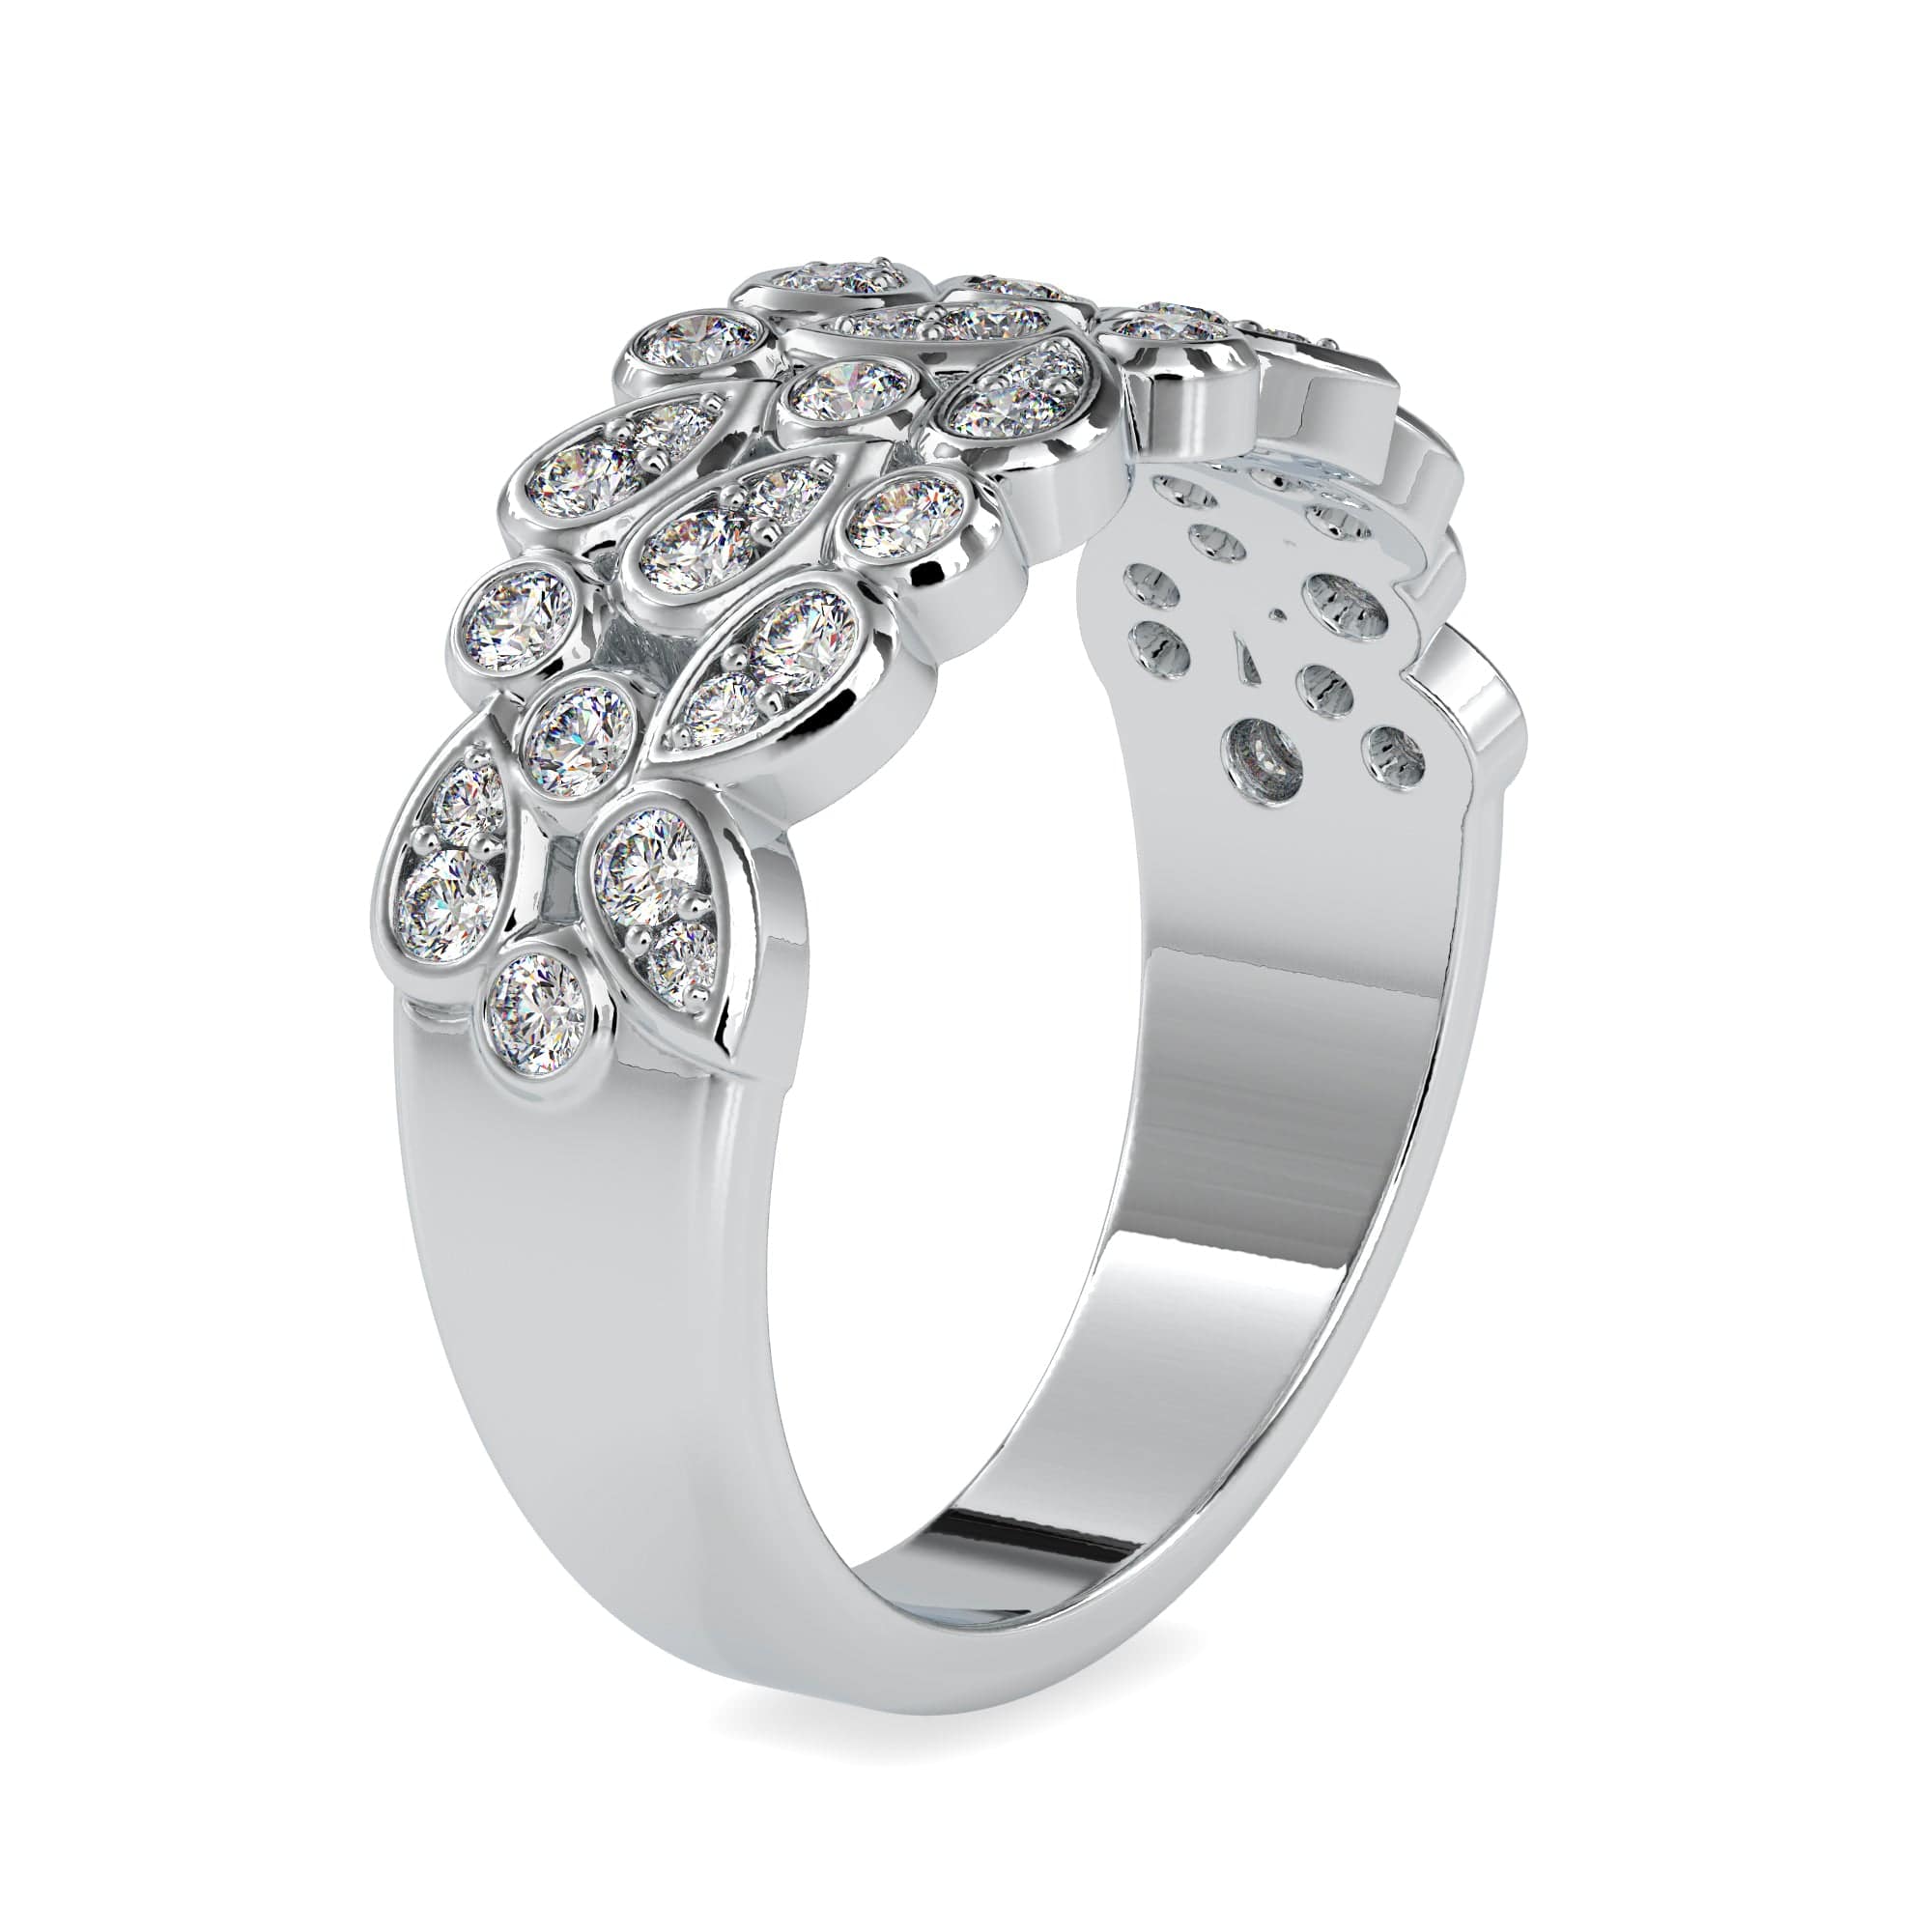 Buy Platinum Rings Online | Platinum rings for Men&Women | Tanishq